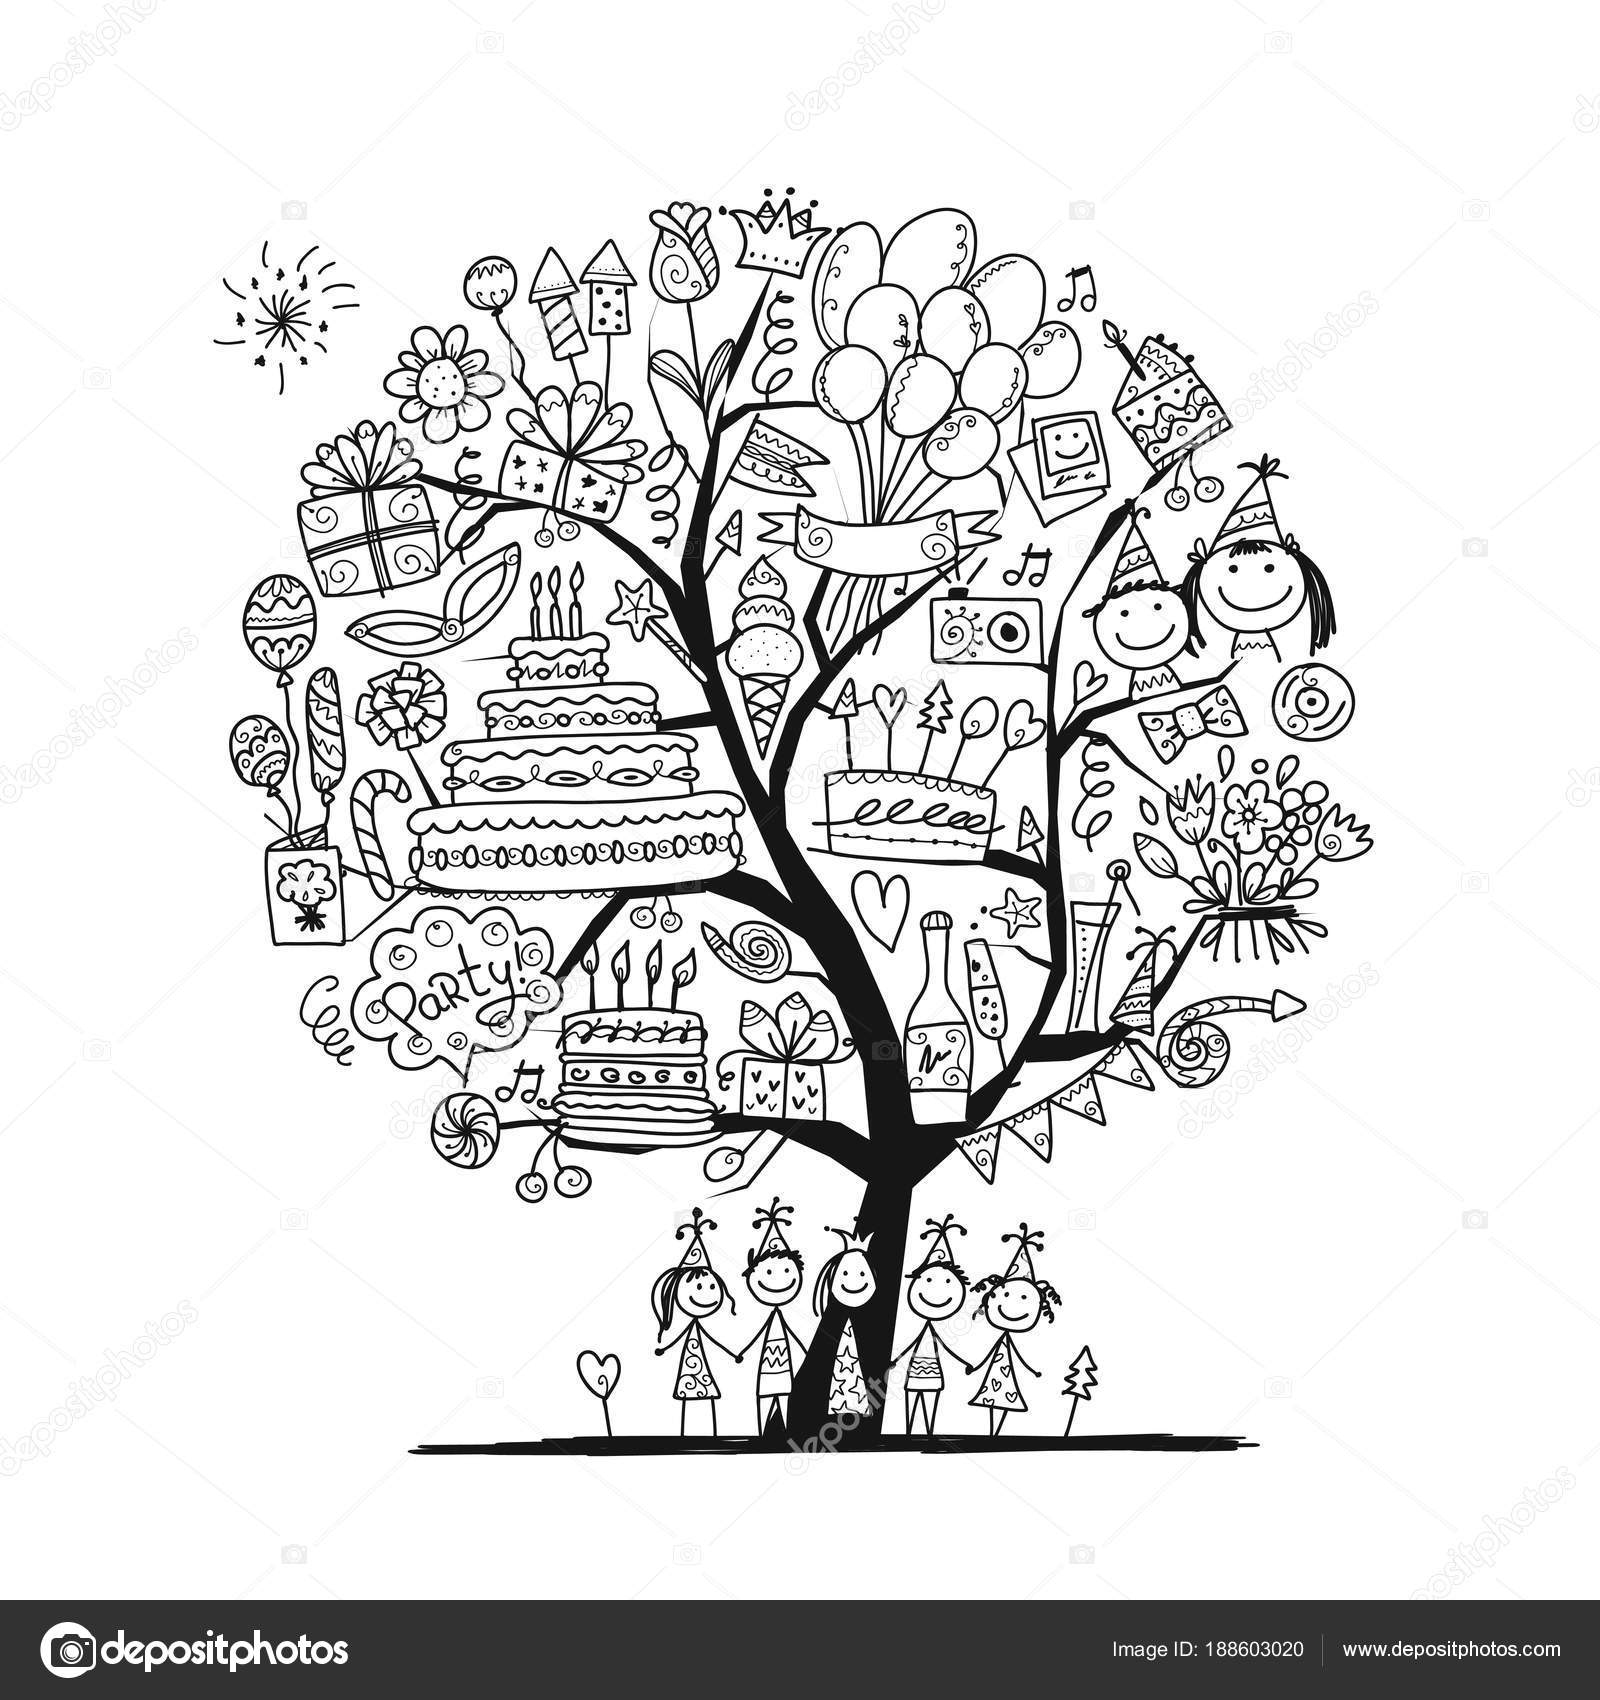 https://st3.depositphotos.com/1000419/18860/v/1600/depositphotos_188603020-stock-illustration-birthday-party-tree-coloring-set.jpg